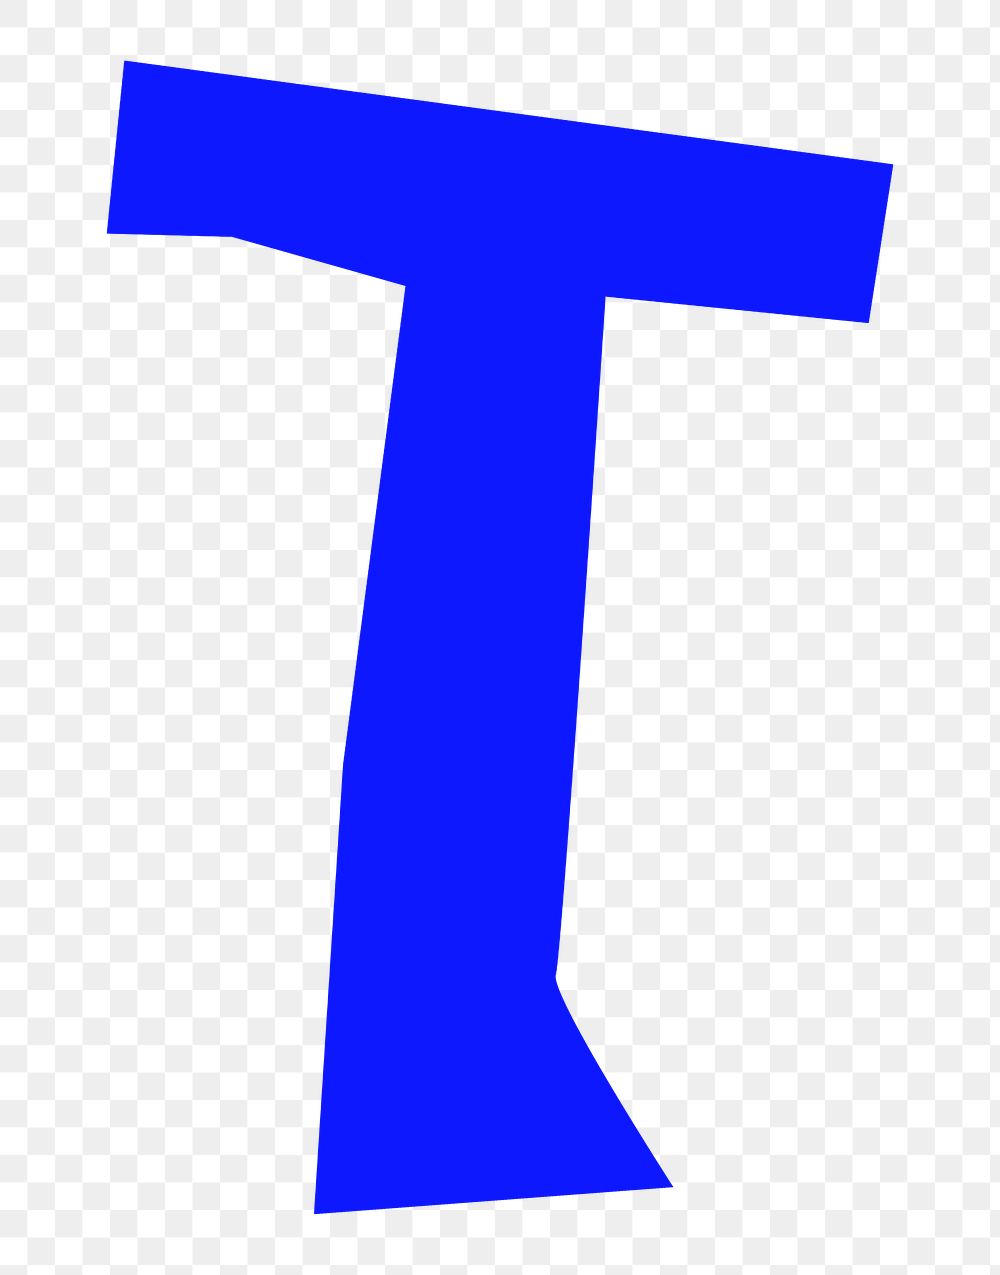 Letter T png in blue paper cut shape font, transparent background